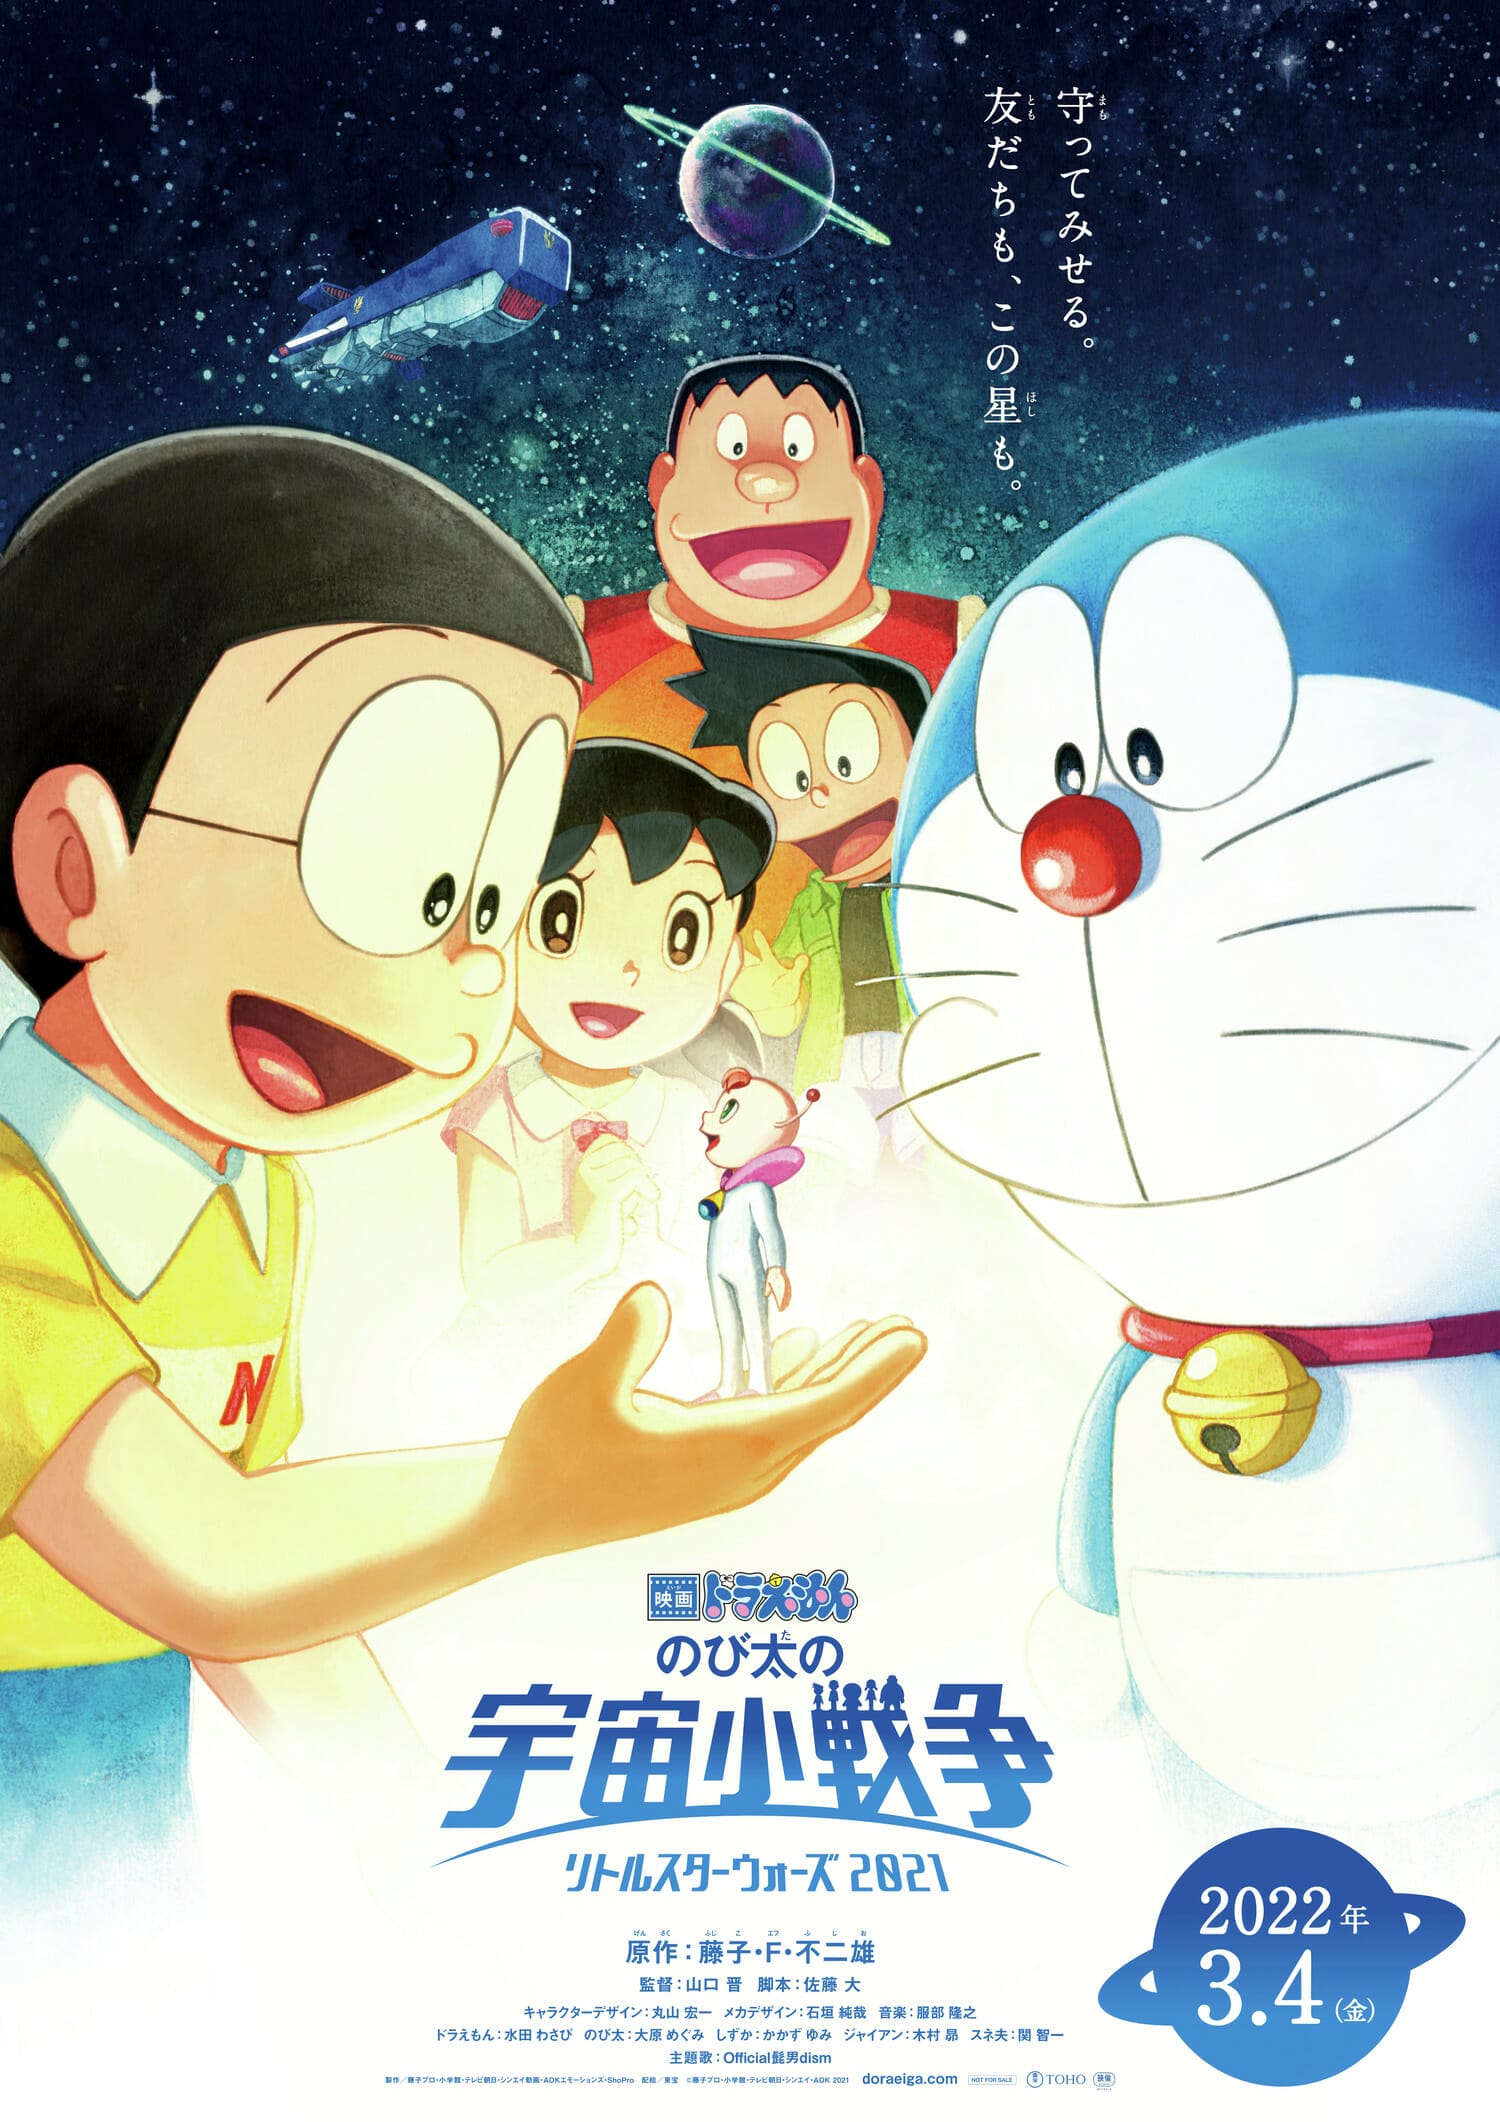 Doraemon: Nobita's Little "Star Wars" 2021